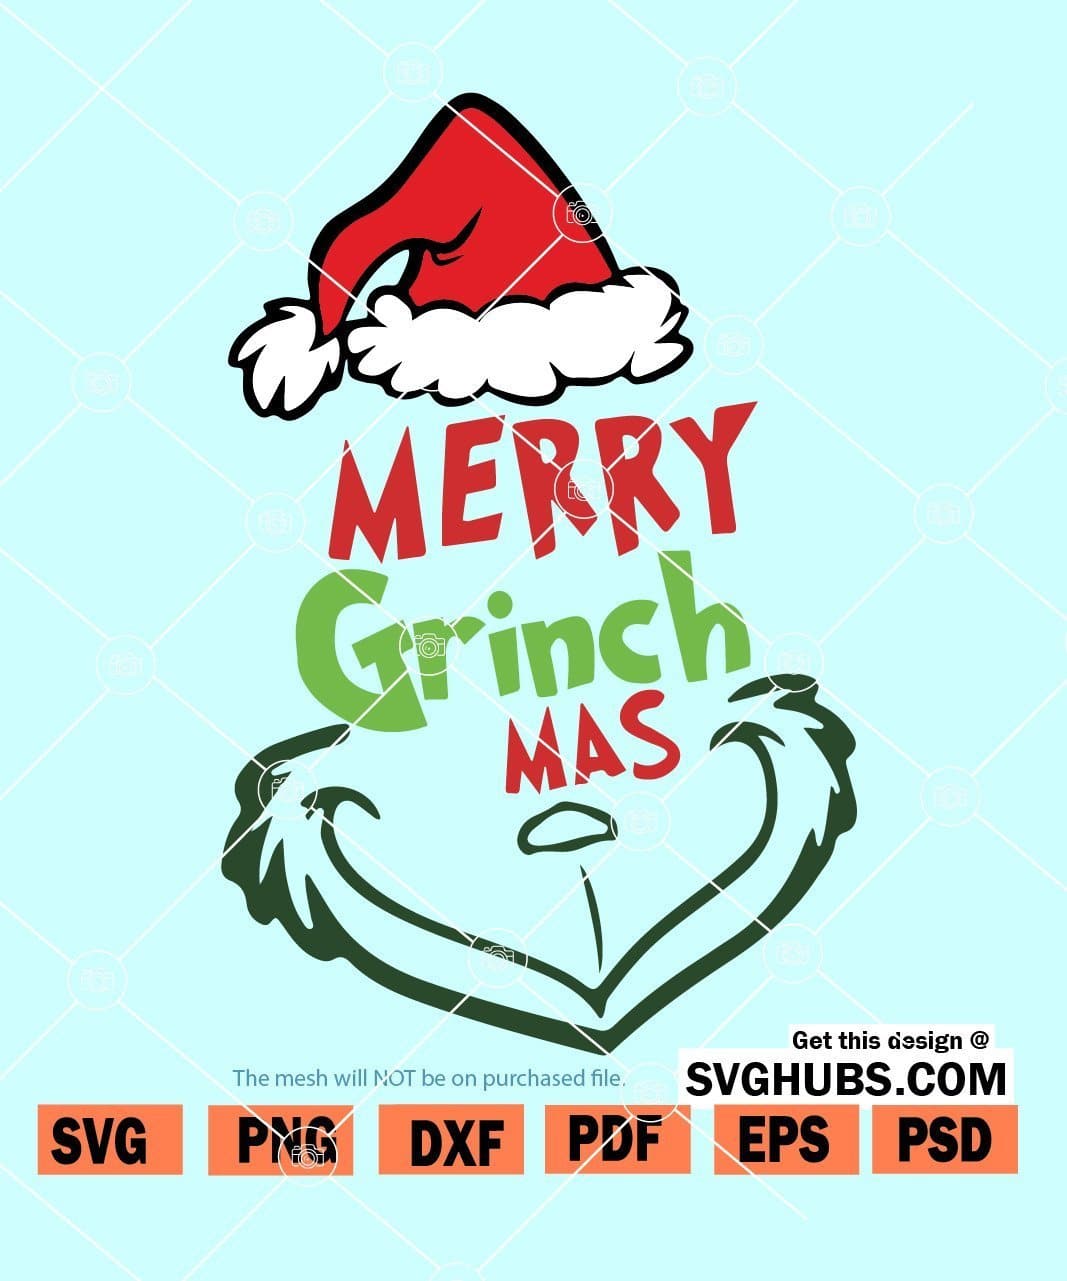 Merry Grinchmas SVG, Christmas Dr Seuss SVG, The grinch SVG